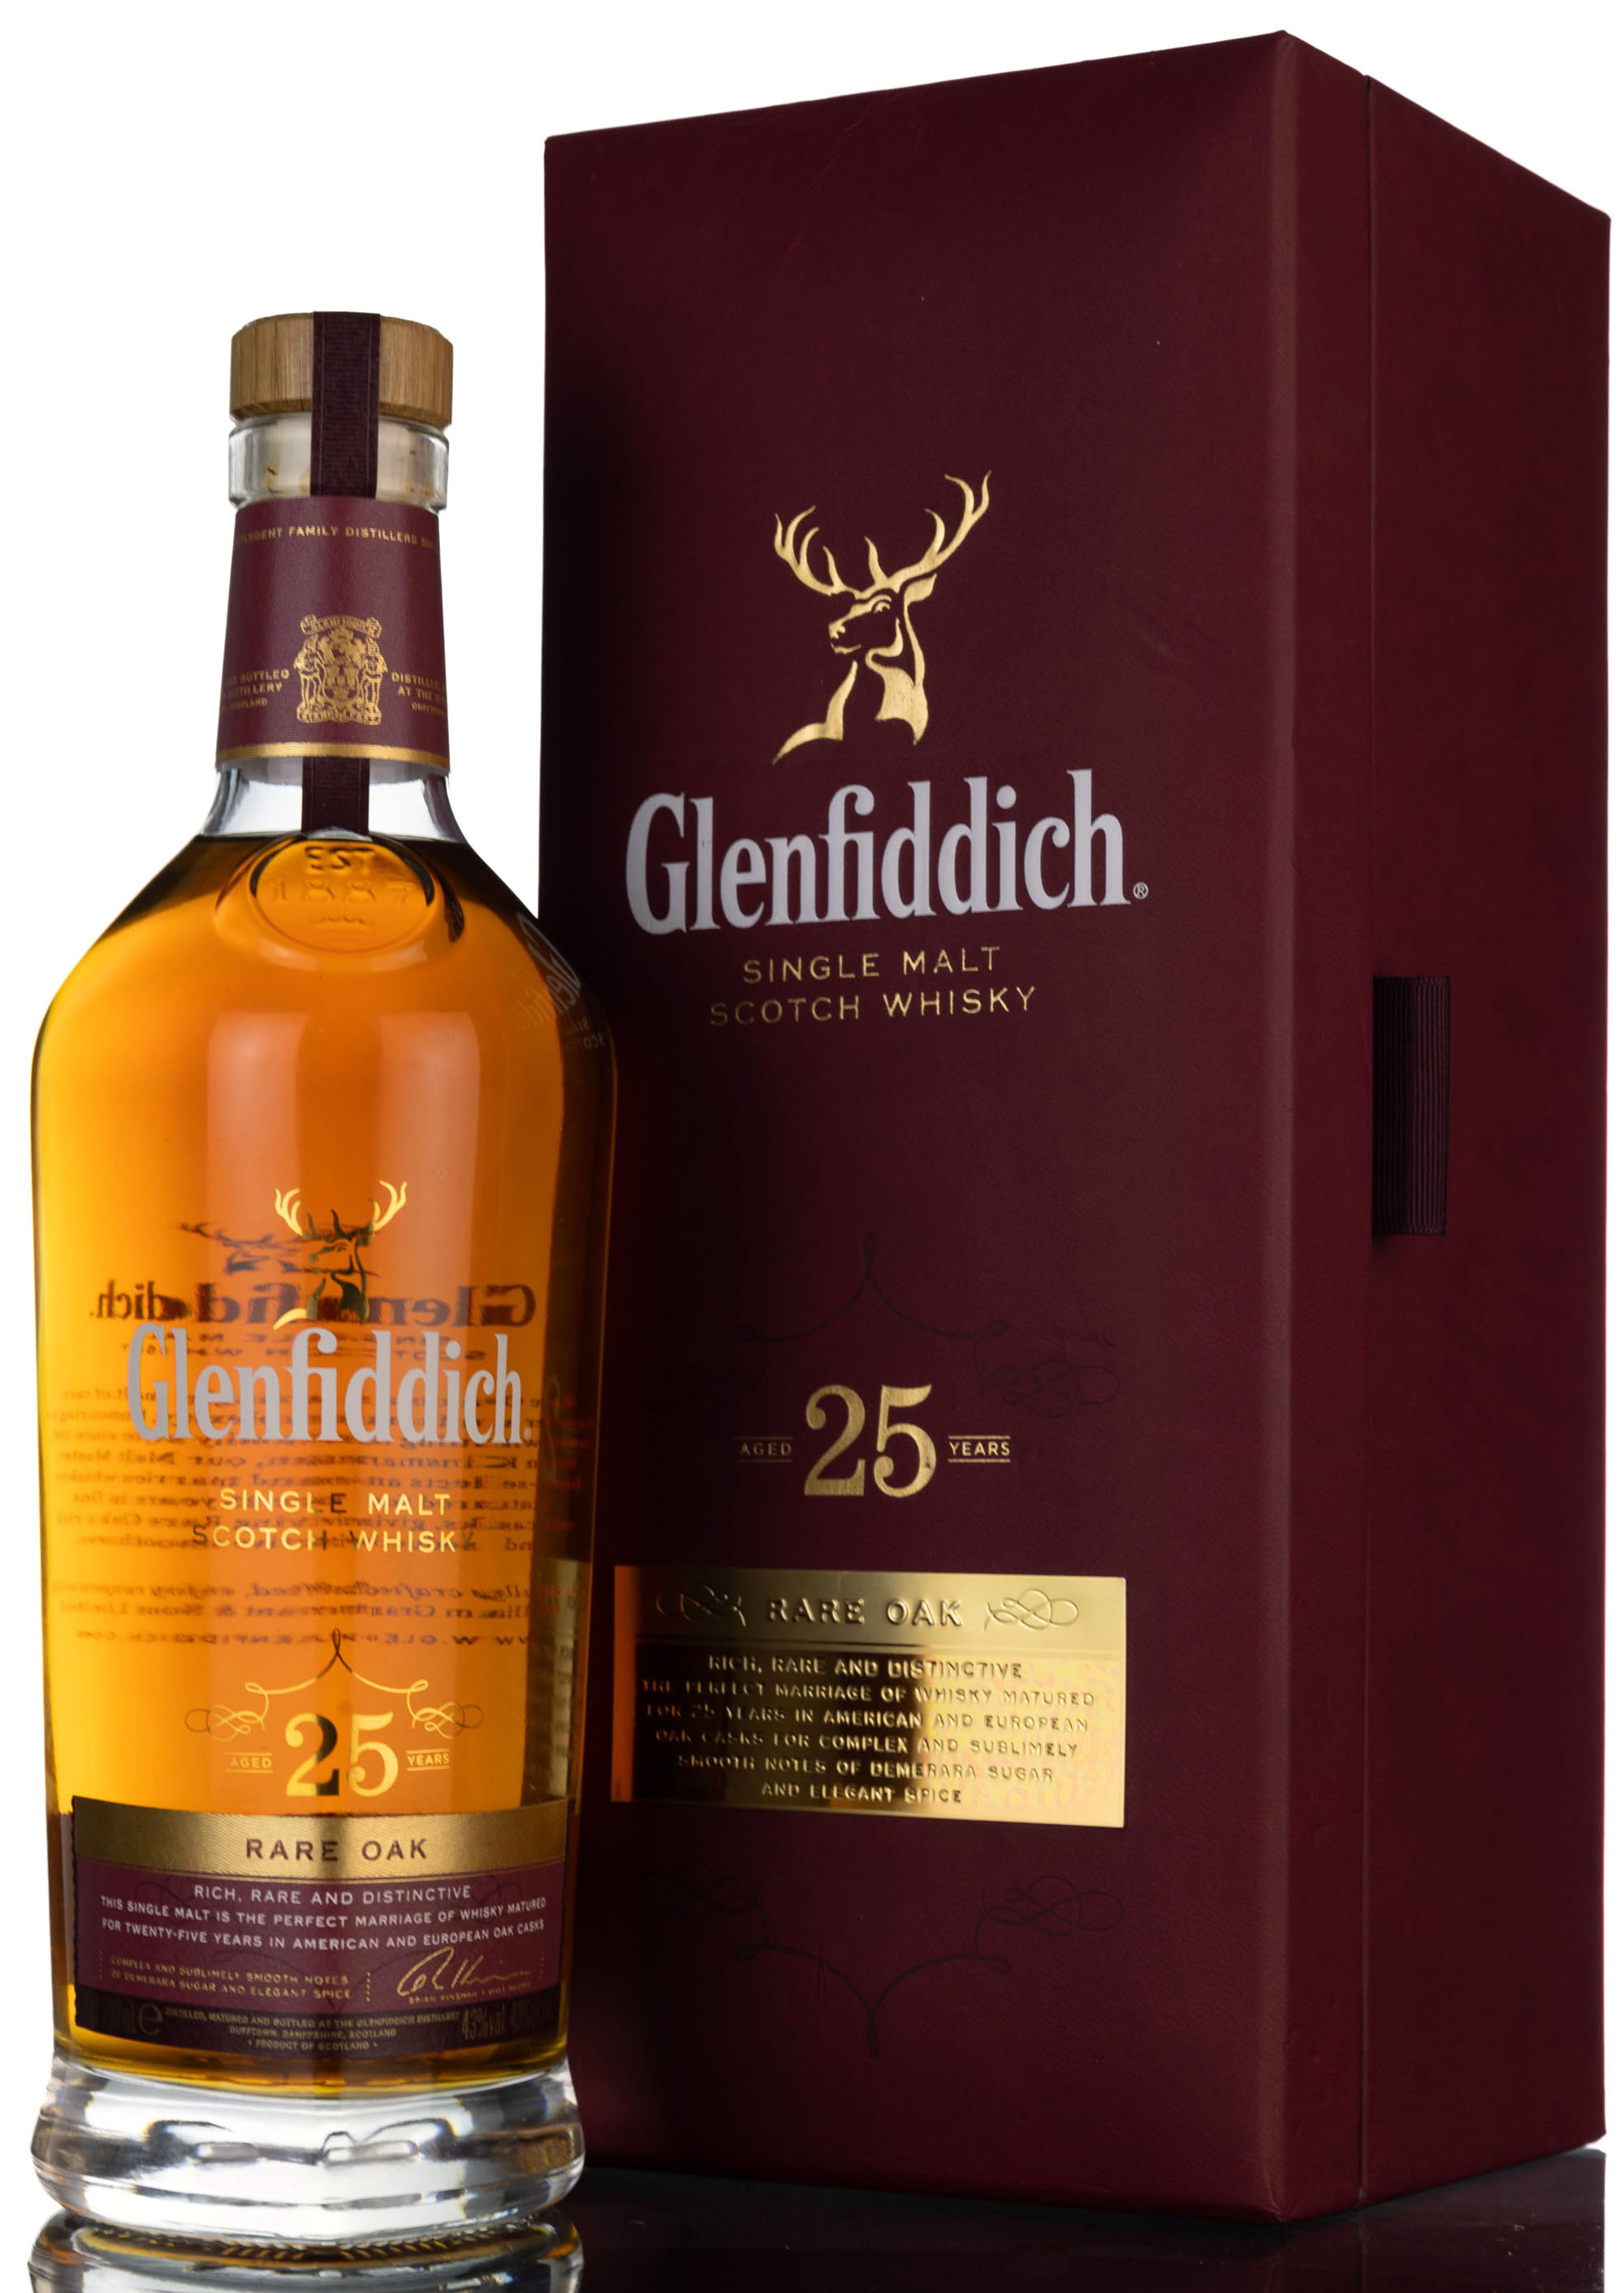 Glenfiddich 25 Year Old - Rare Oak